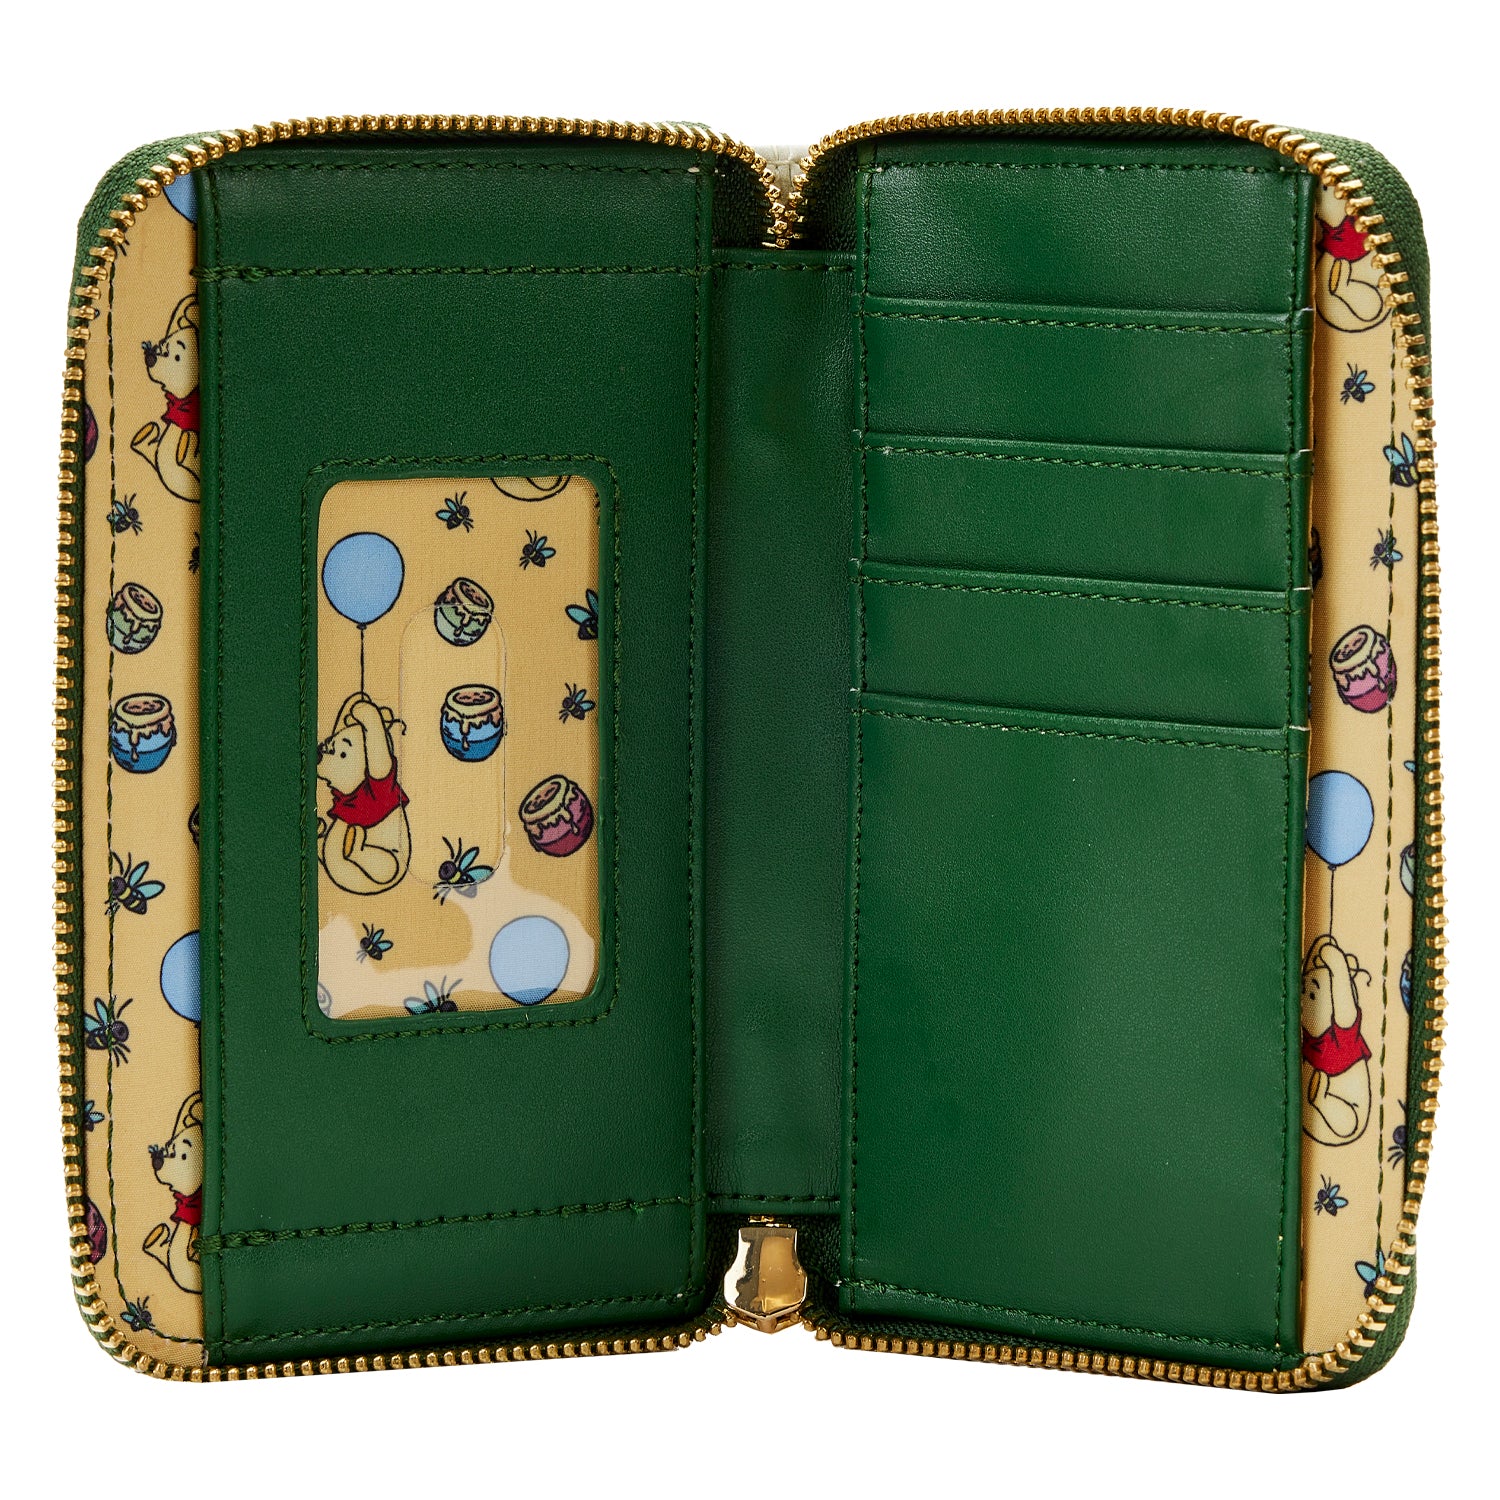 Disney | Winnie The Pooh Classic Books Convertible Zip Around Wallet